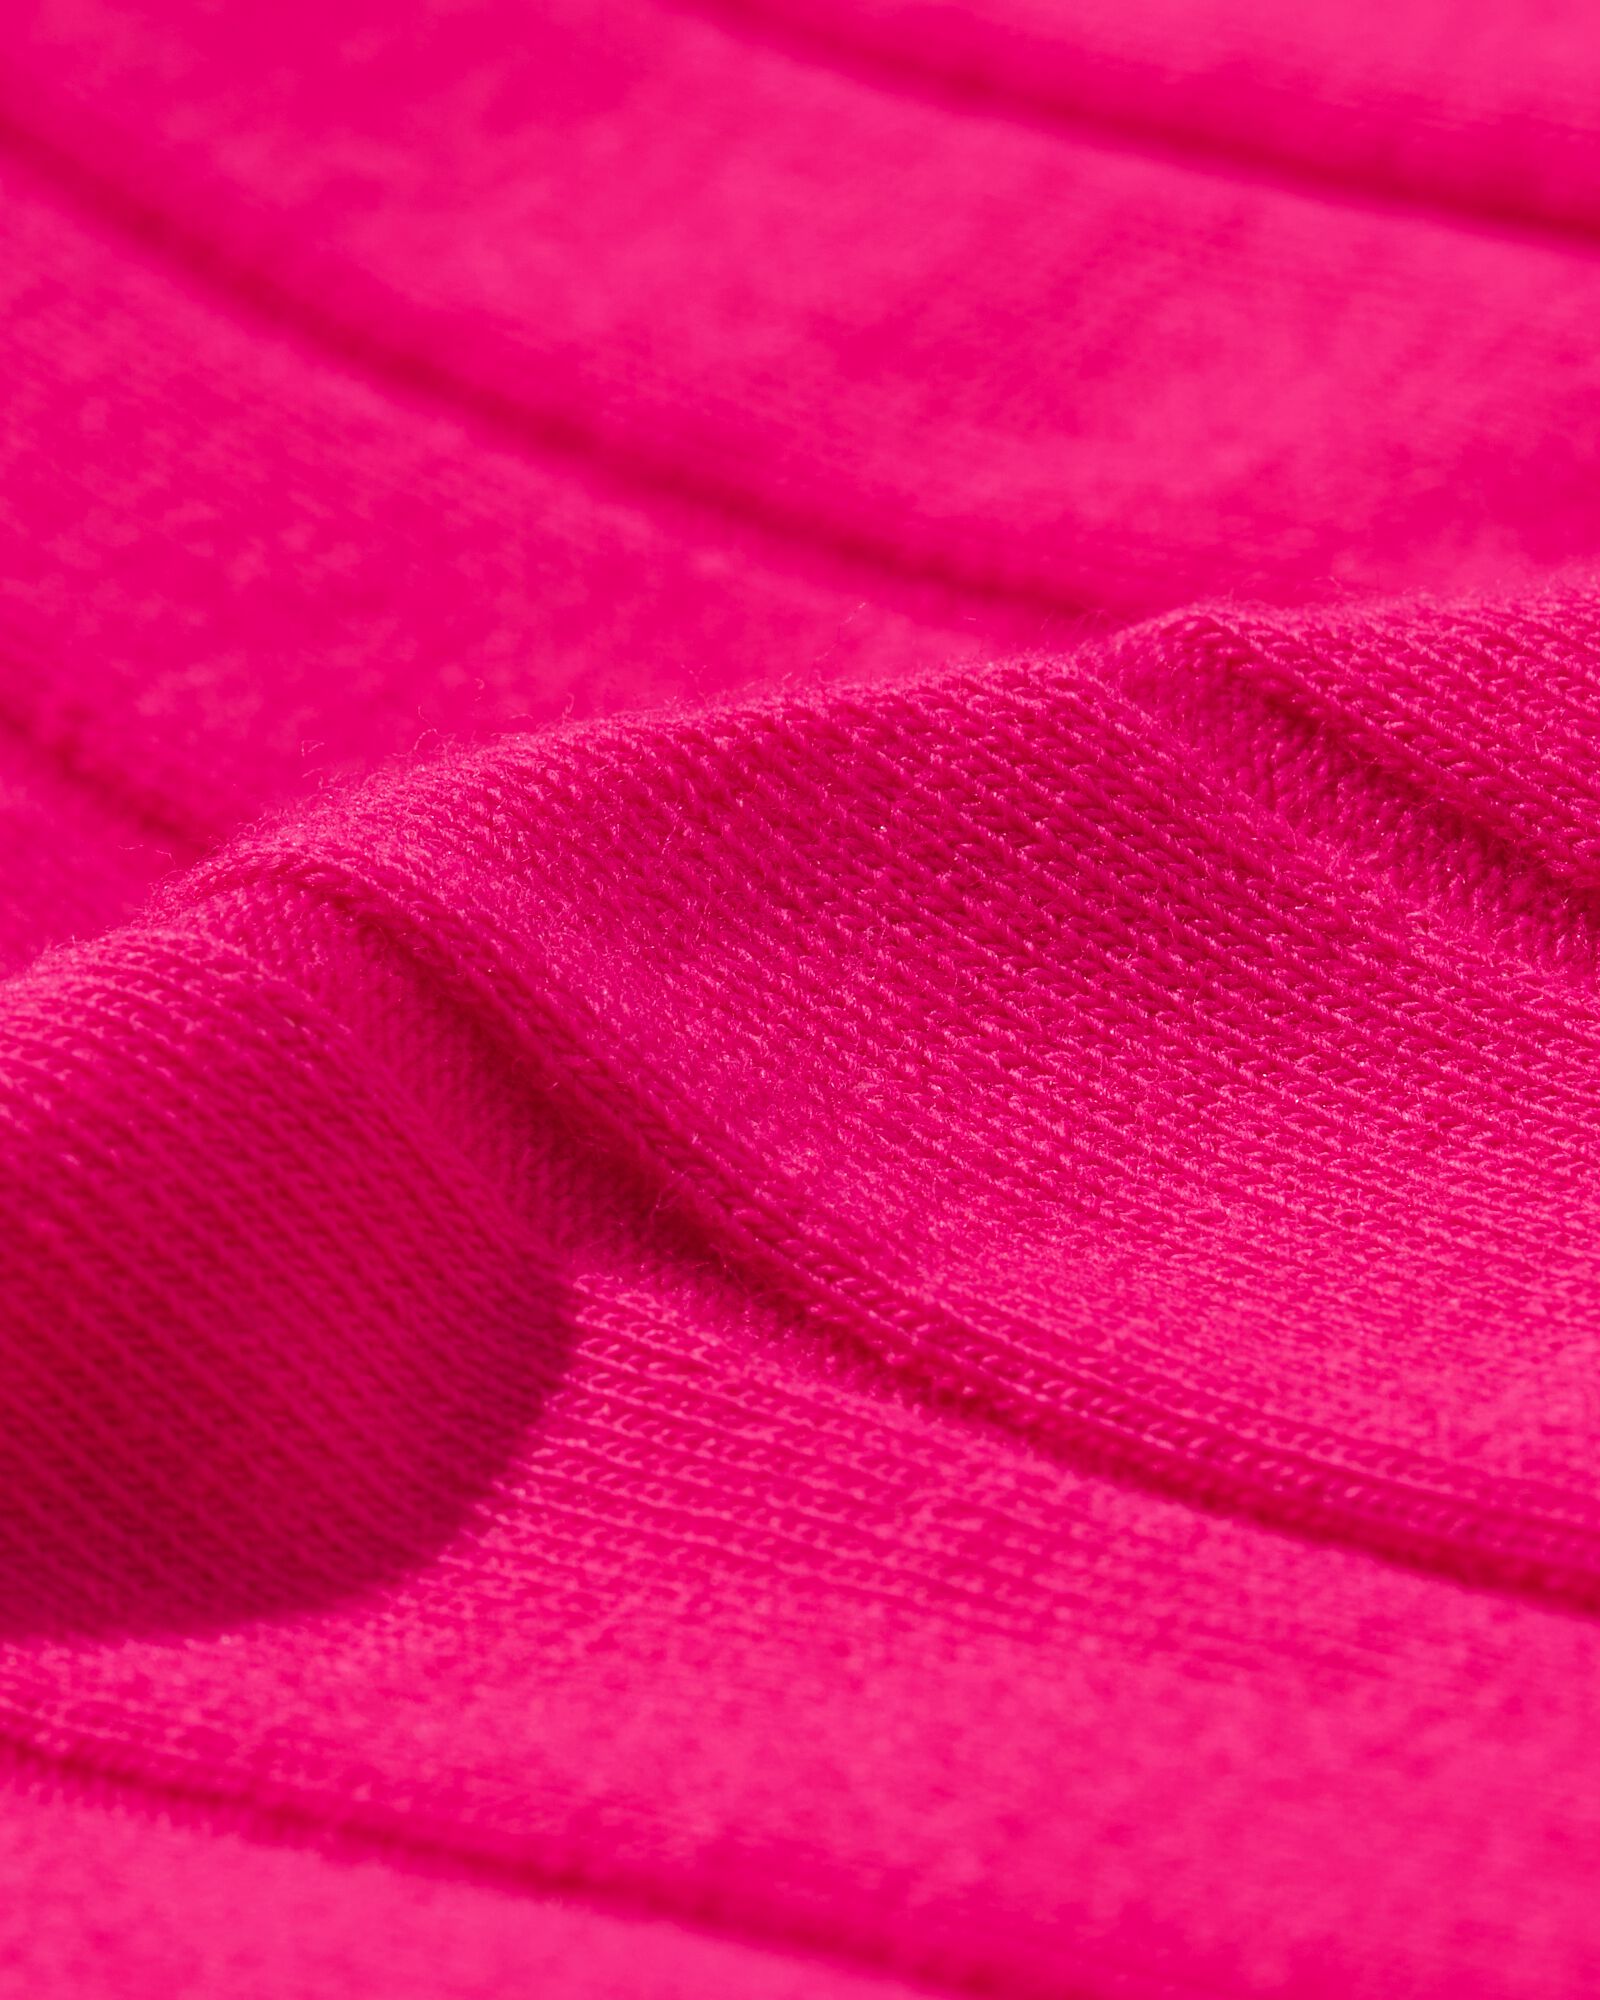 kinder t-shirt met ribbels roze roze - 1000032211 - HEMA